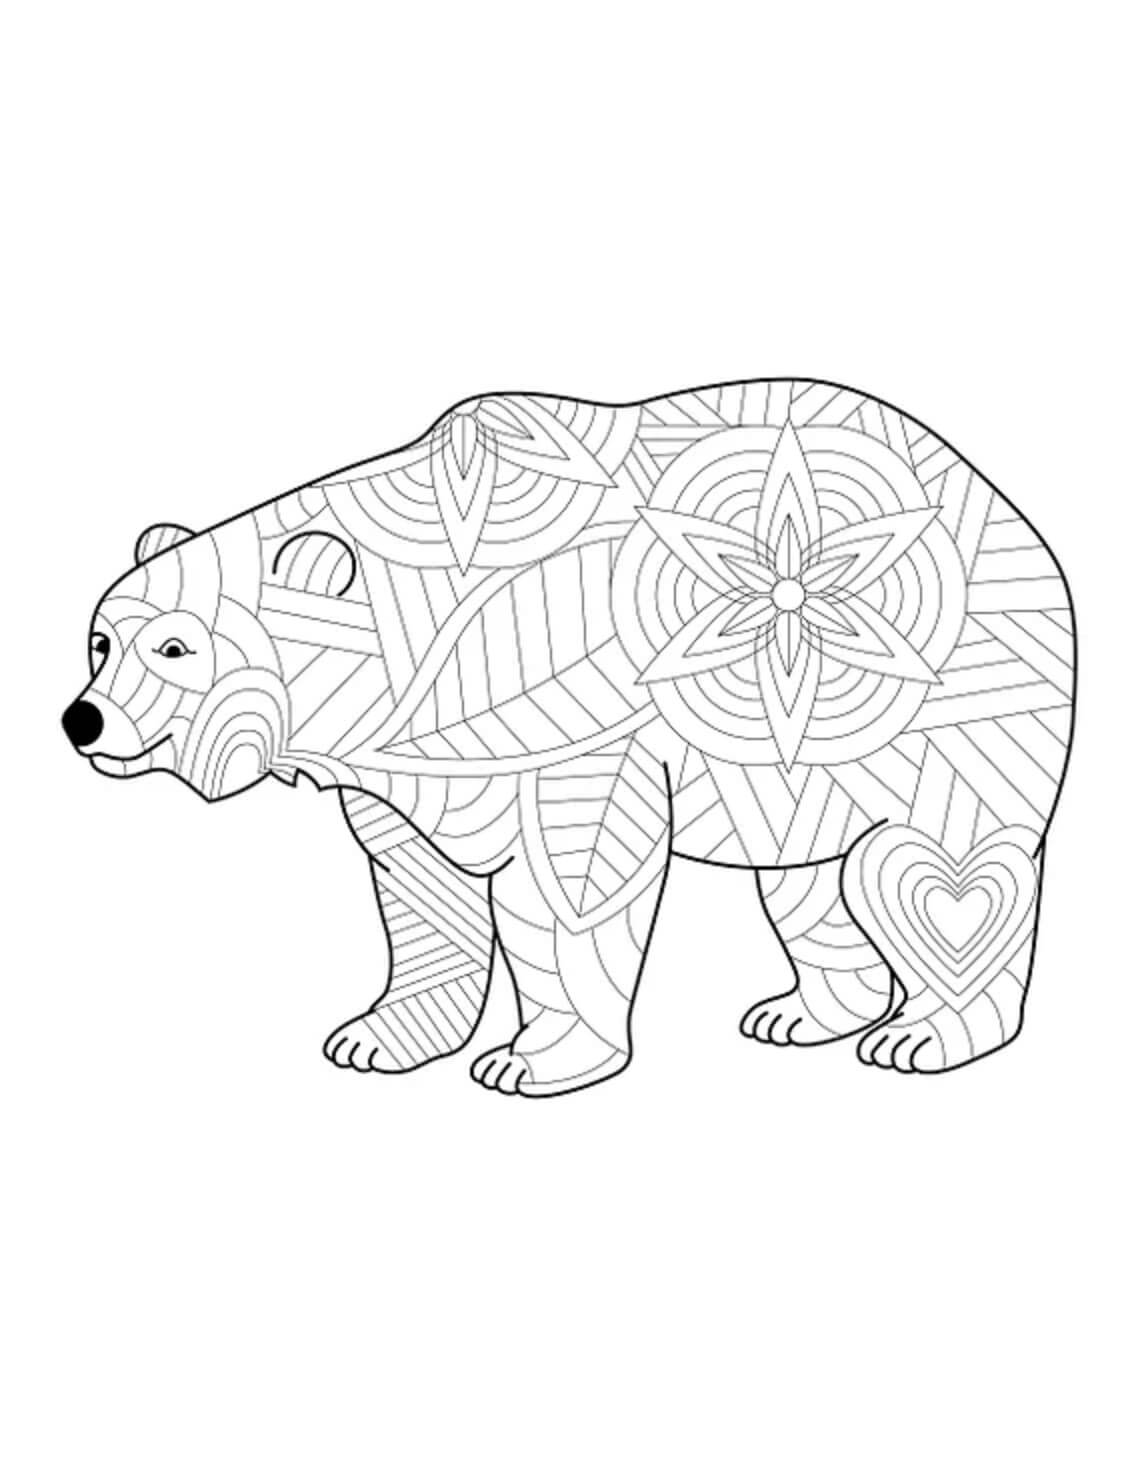 Mandala do Urso Polar para colorir